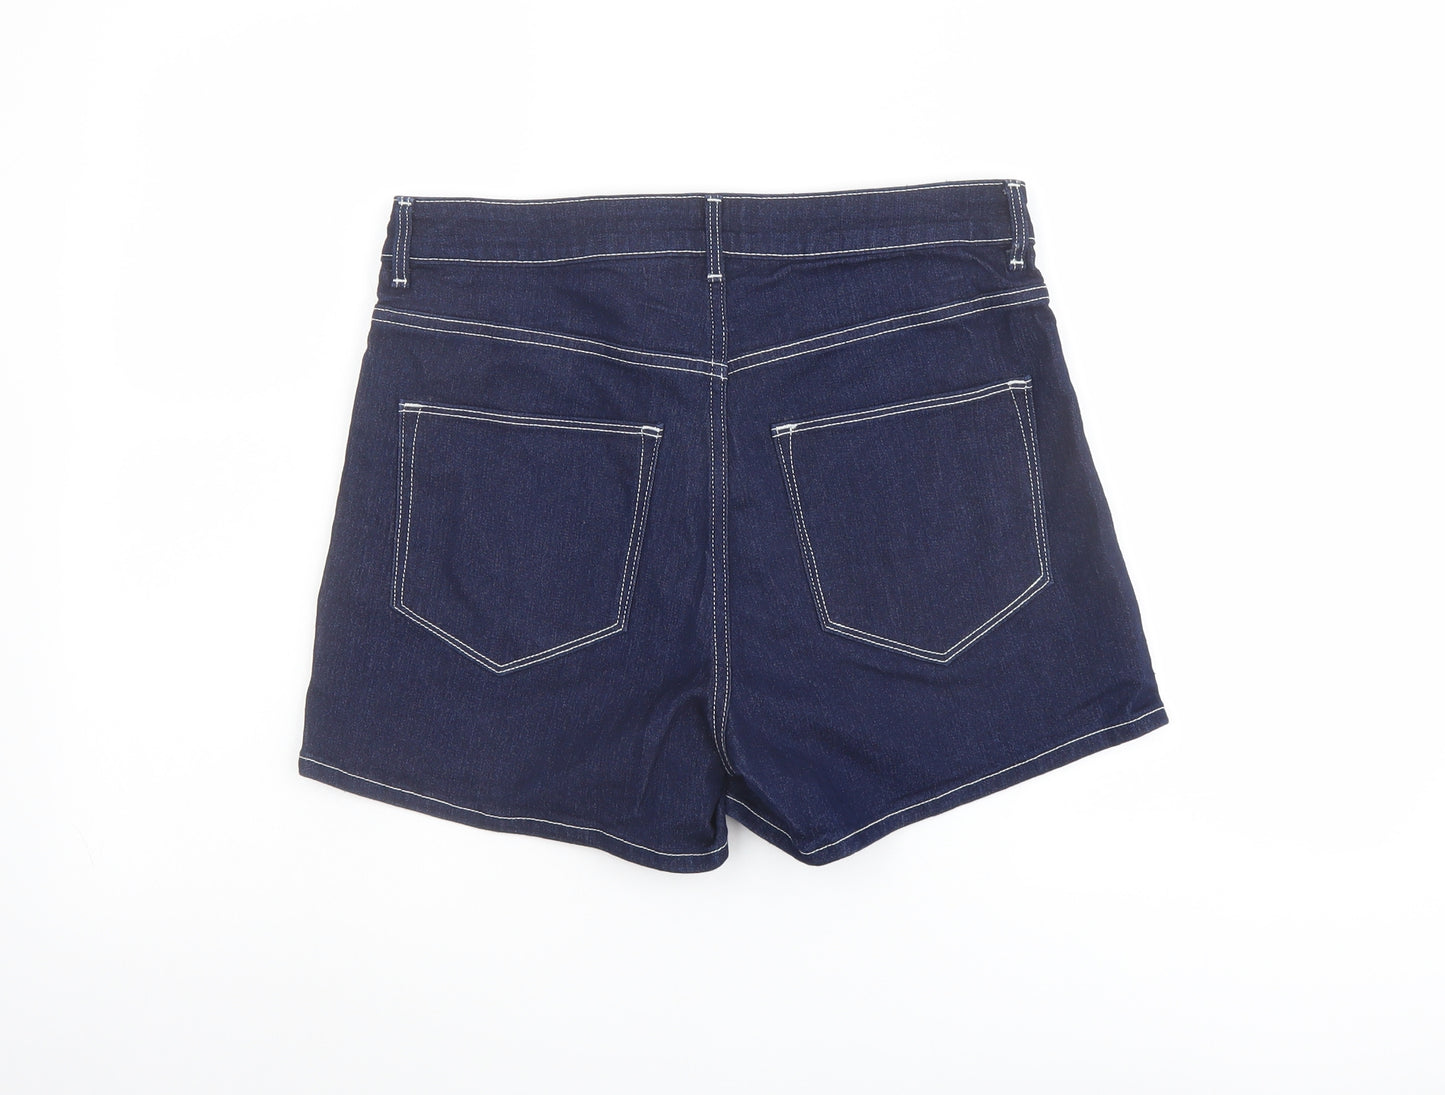 H&M Womens Blue Cotton Boyfriend Shorts Size 12 L3 in Regular Button